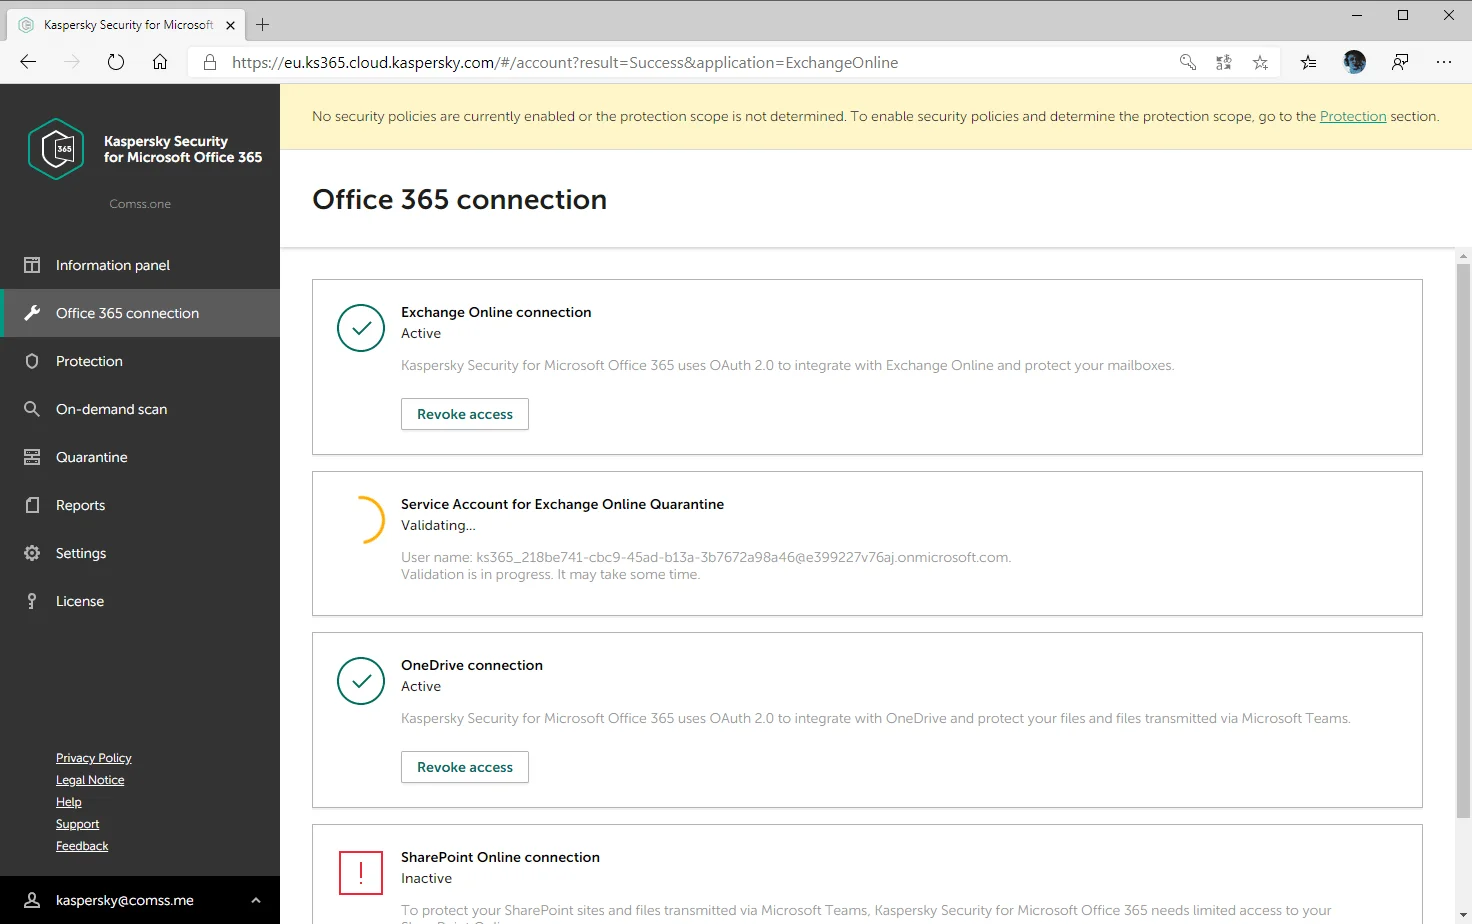 Kaspersky Security для Microsoft Office 365